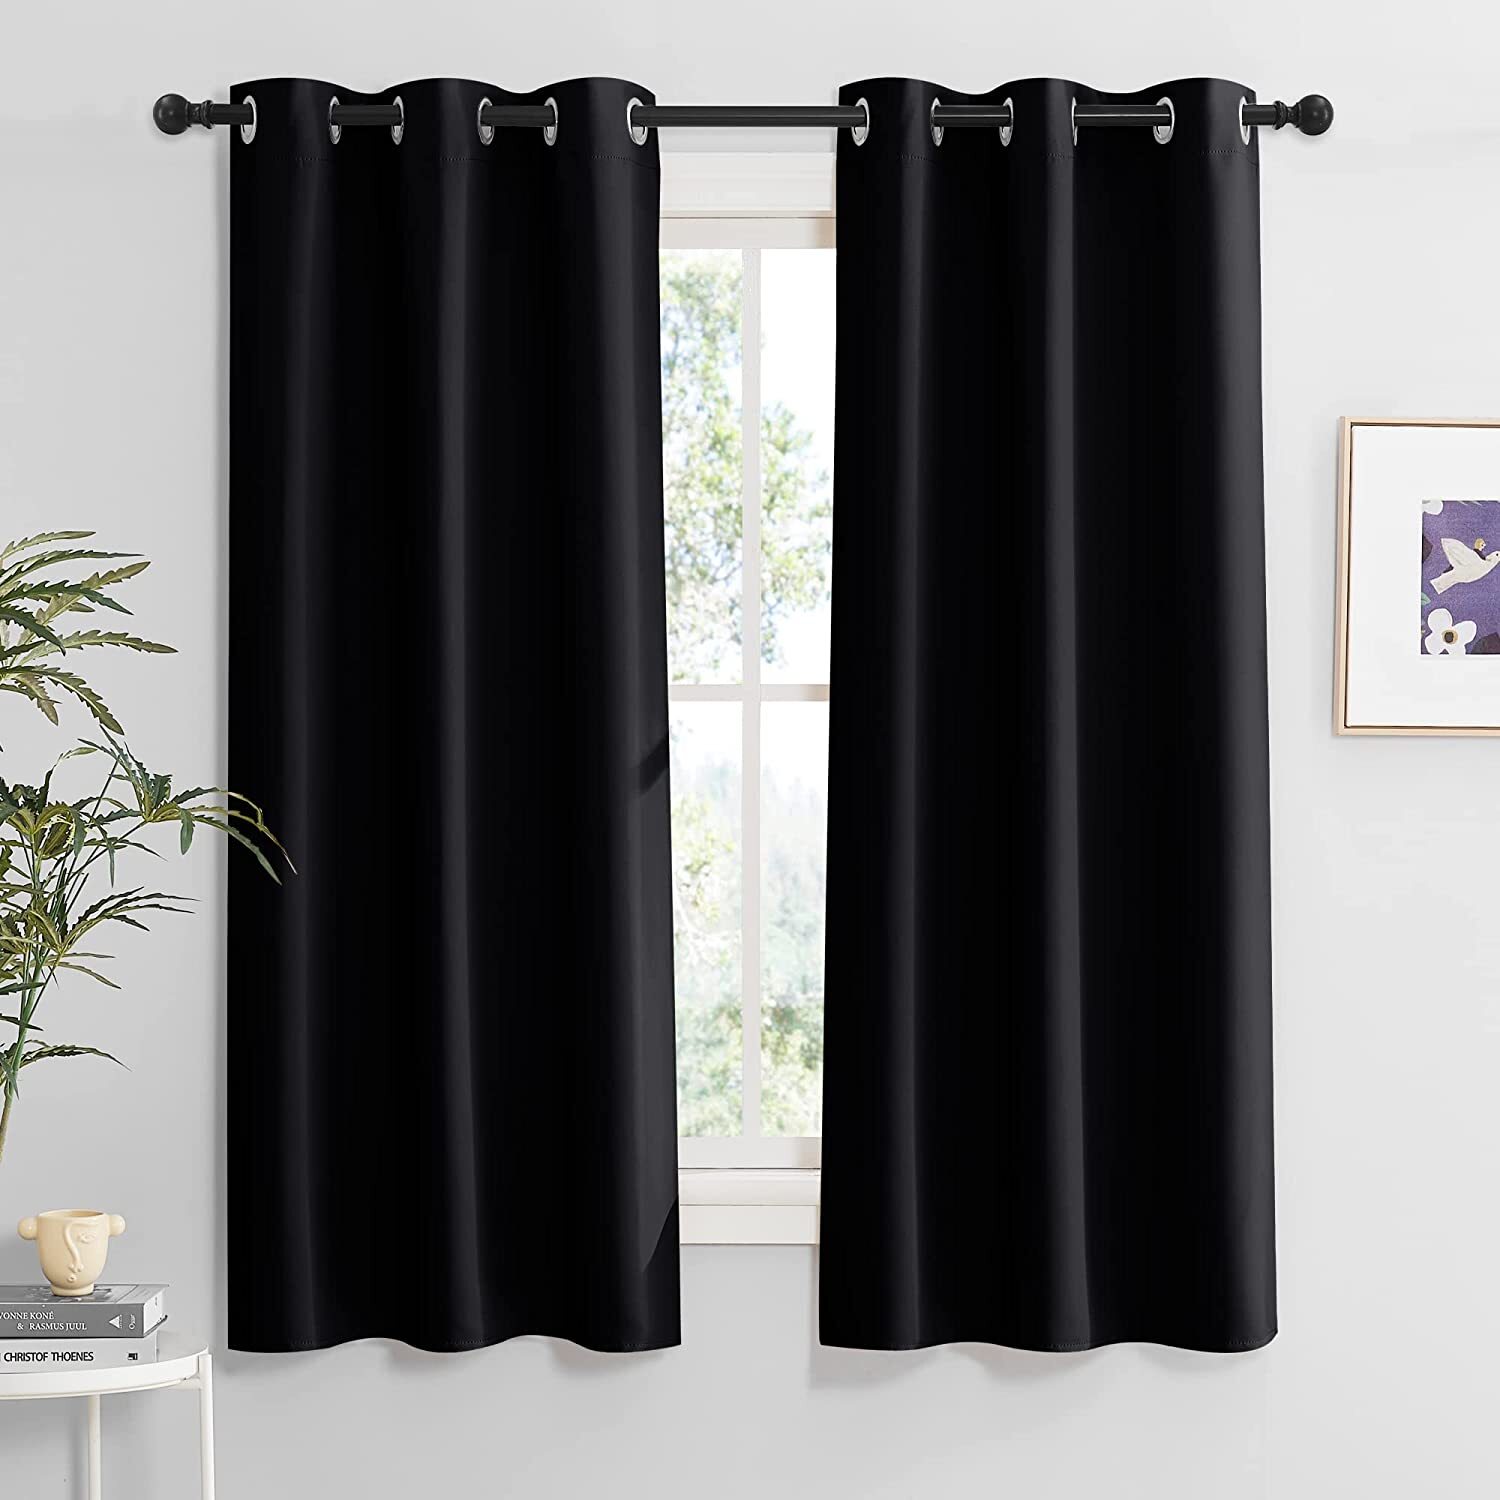 2 X Blackout 3 Layers Eyelet Curtain Drapes - Black